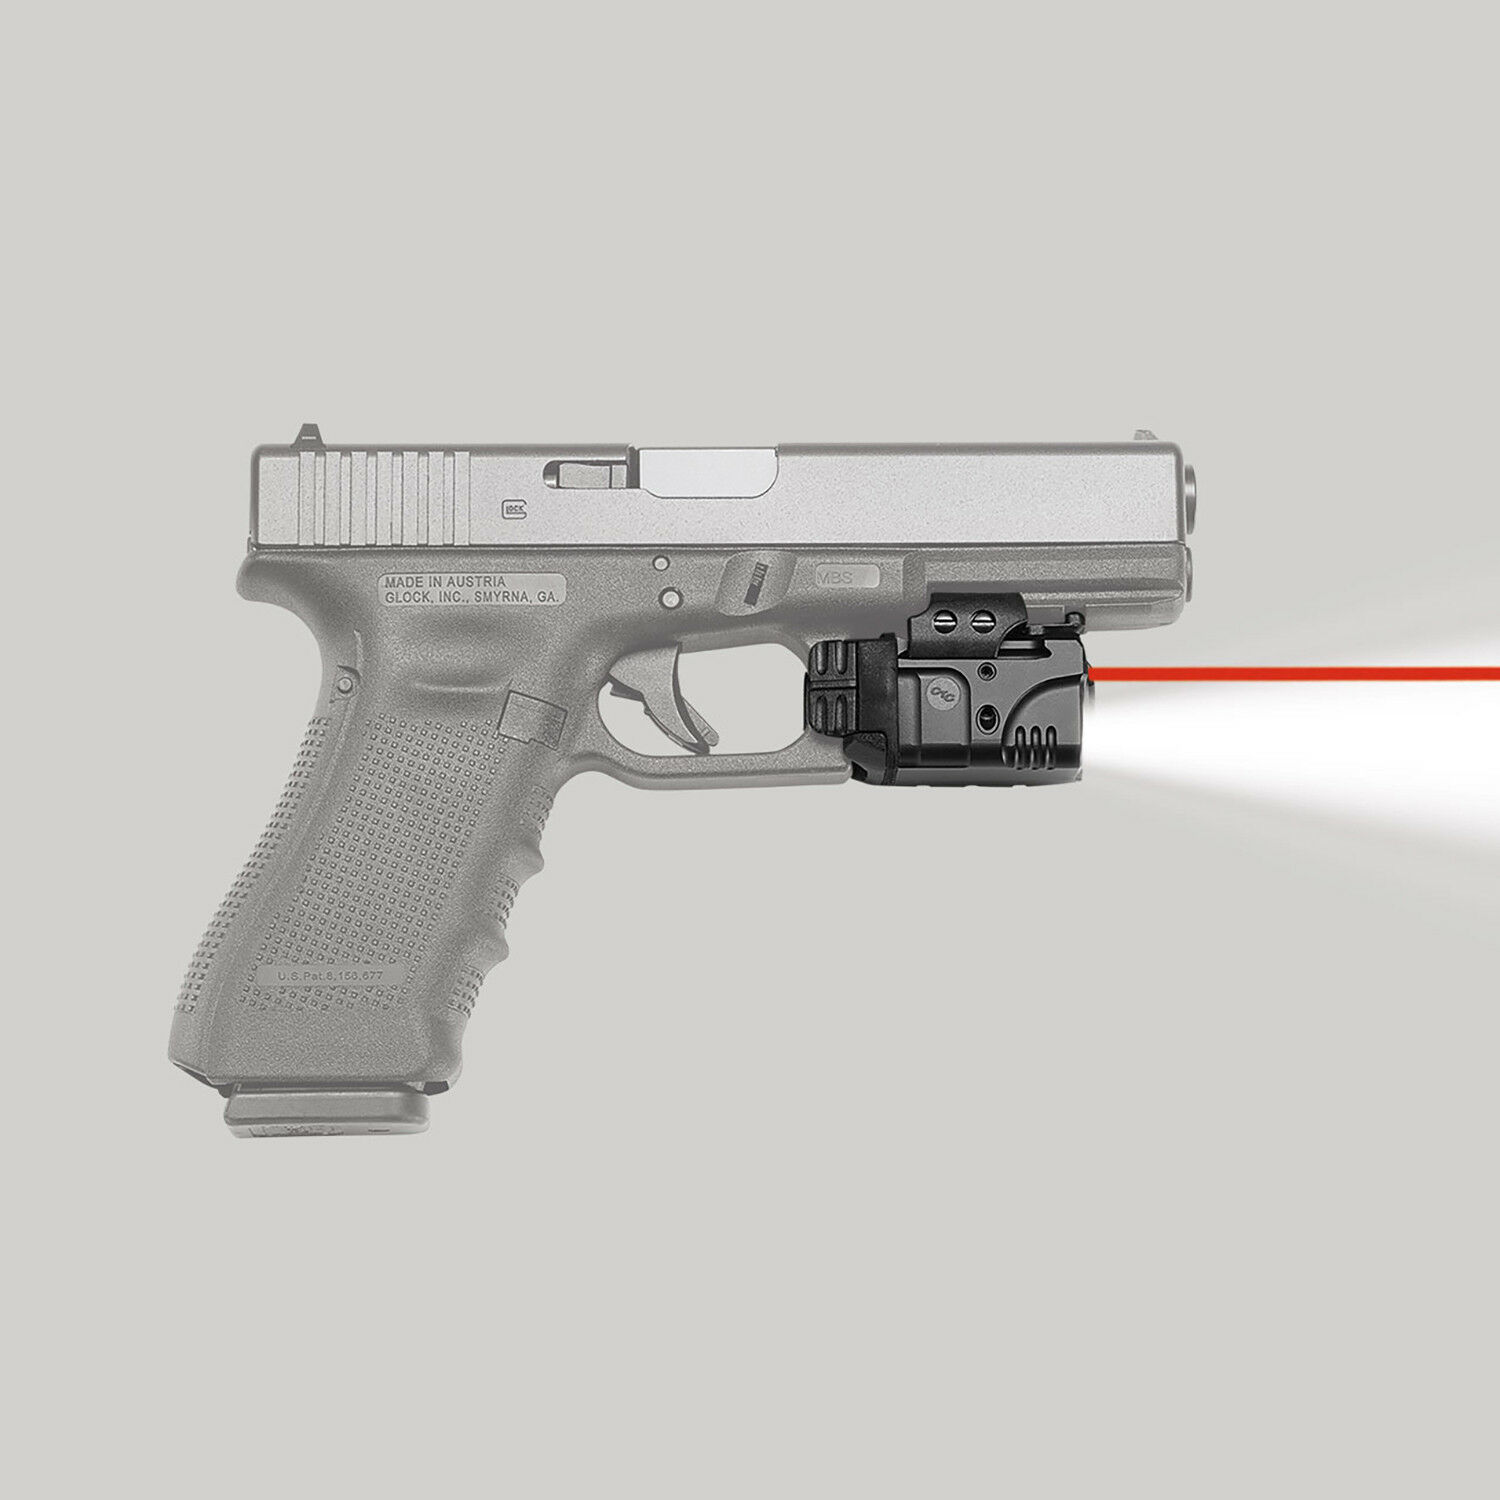 Tactic Gun Rifle Pistol Scope Hunting Red Green Dot Laser Sight 11/20 mm Rail